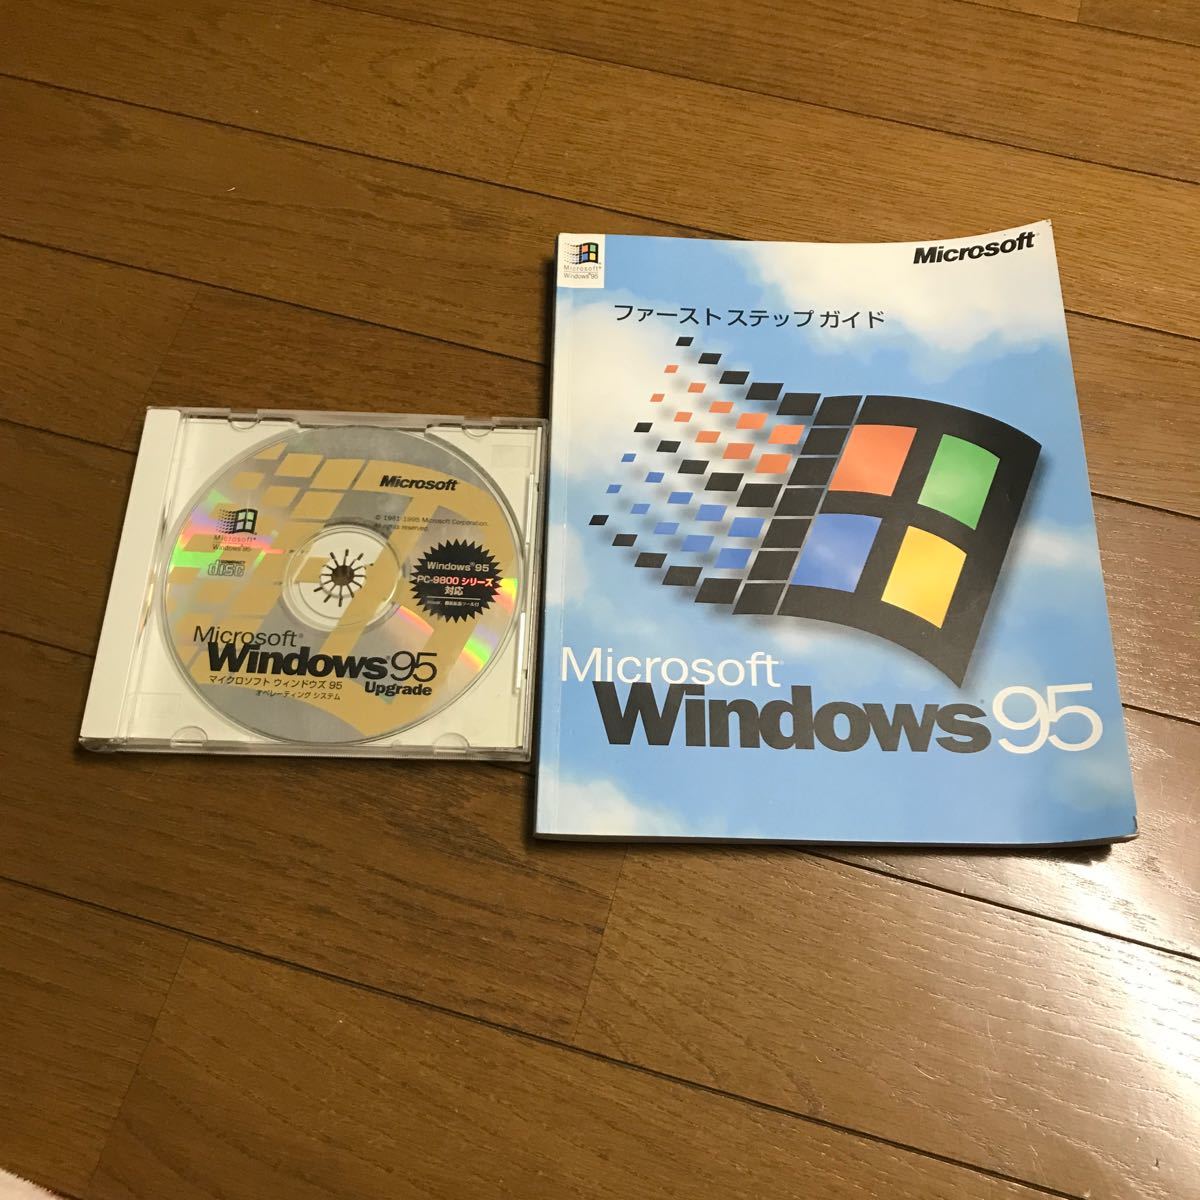 PC-9800シリーズ、Windows95 upgrade